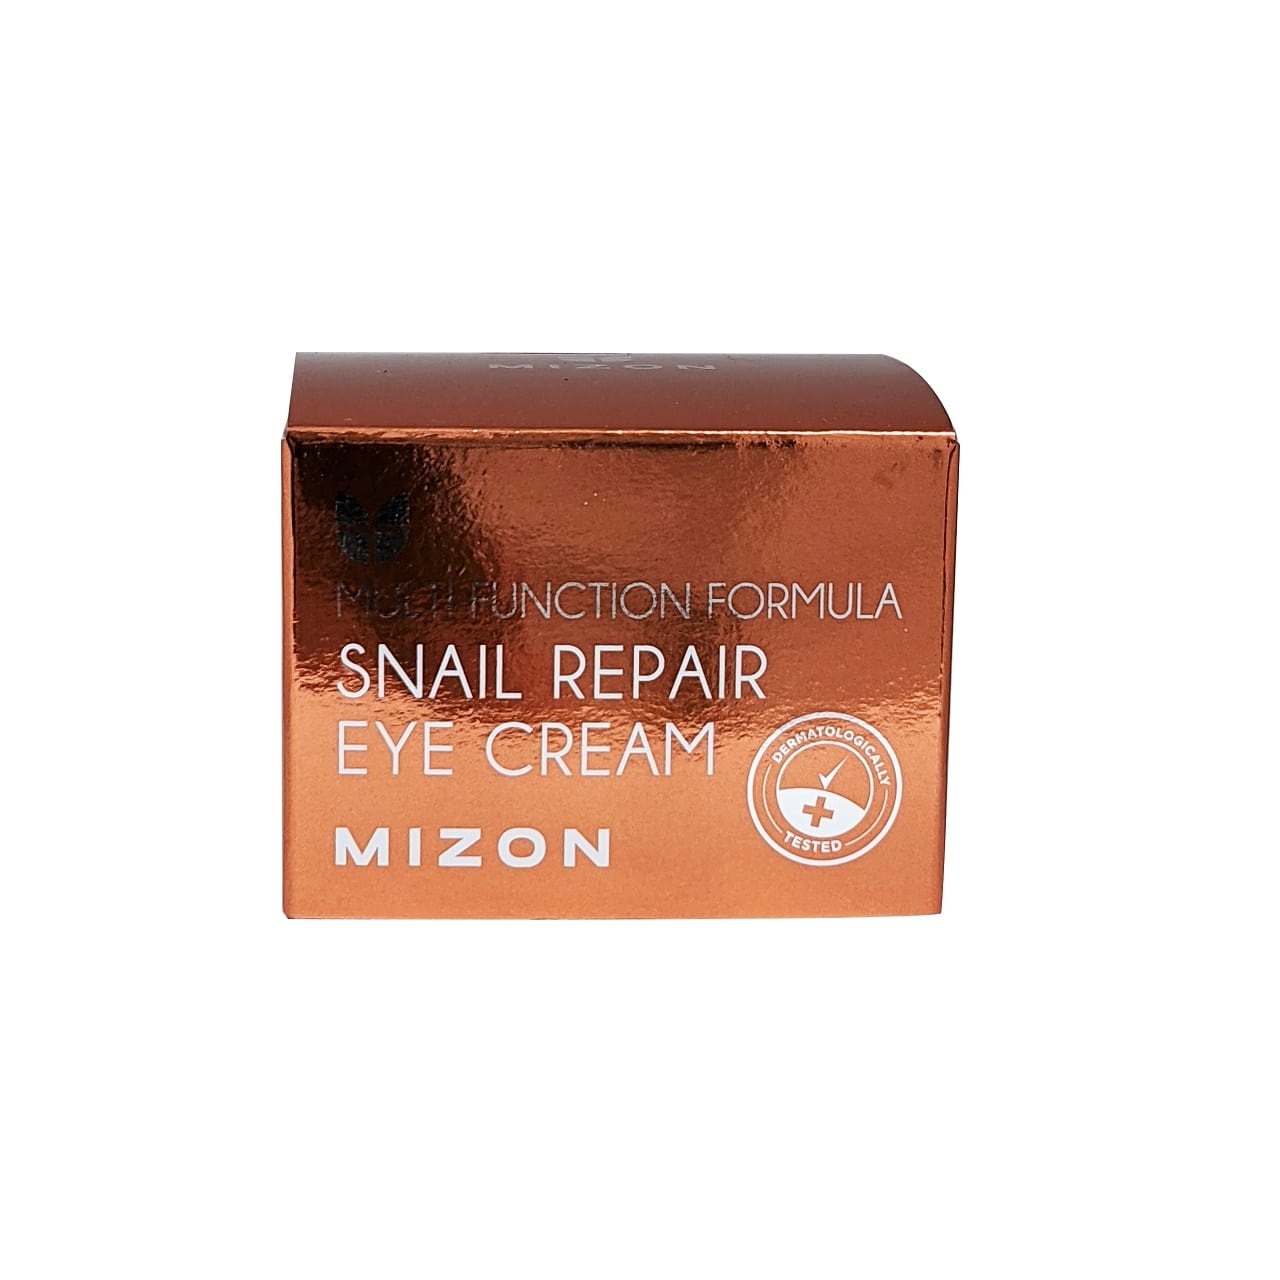 Product label for Mizon Snail Repair Eye Cream